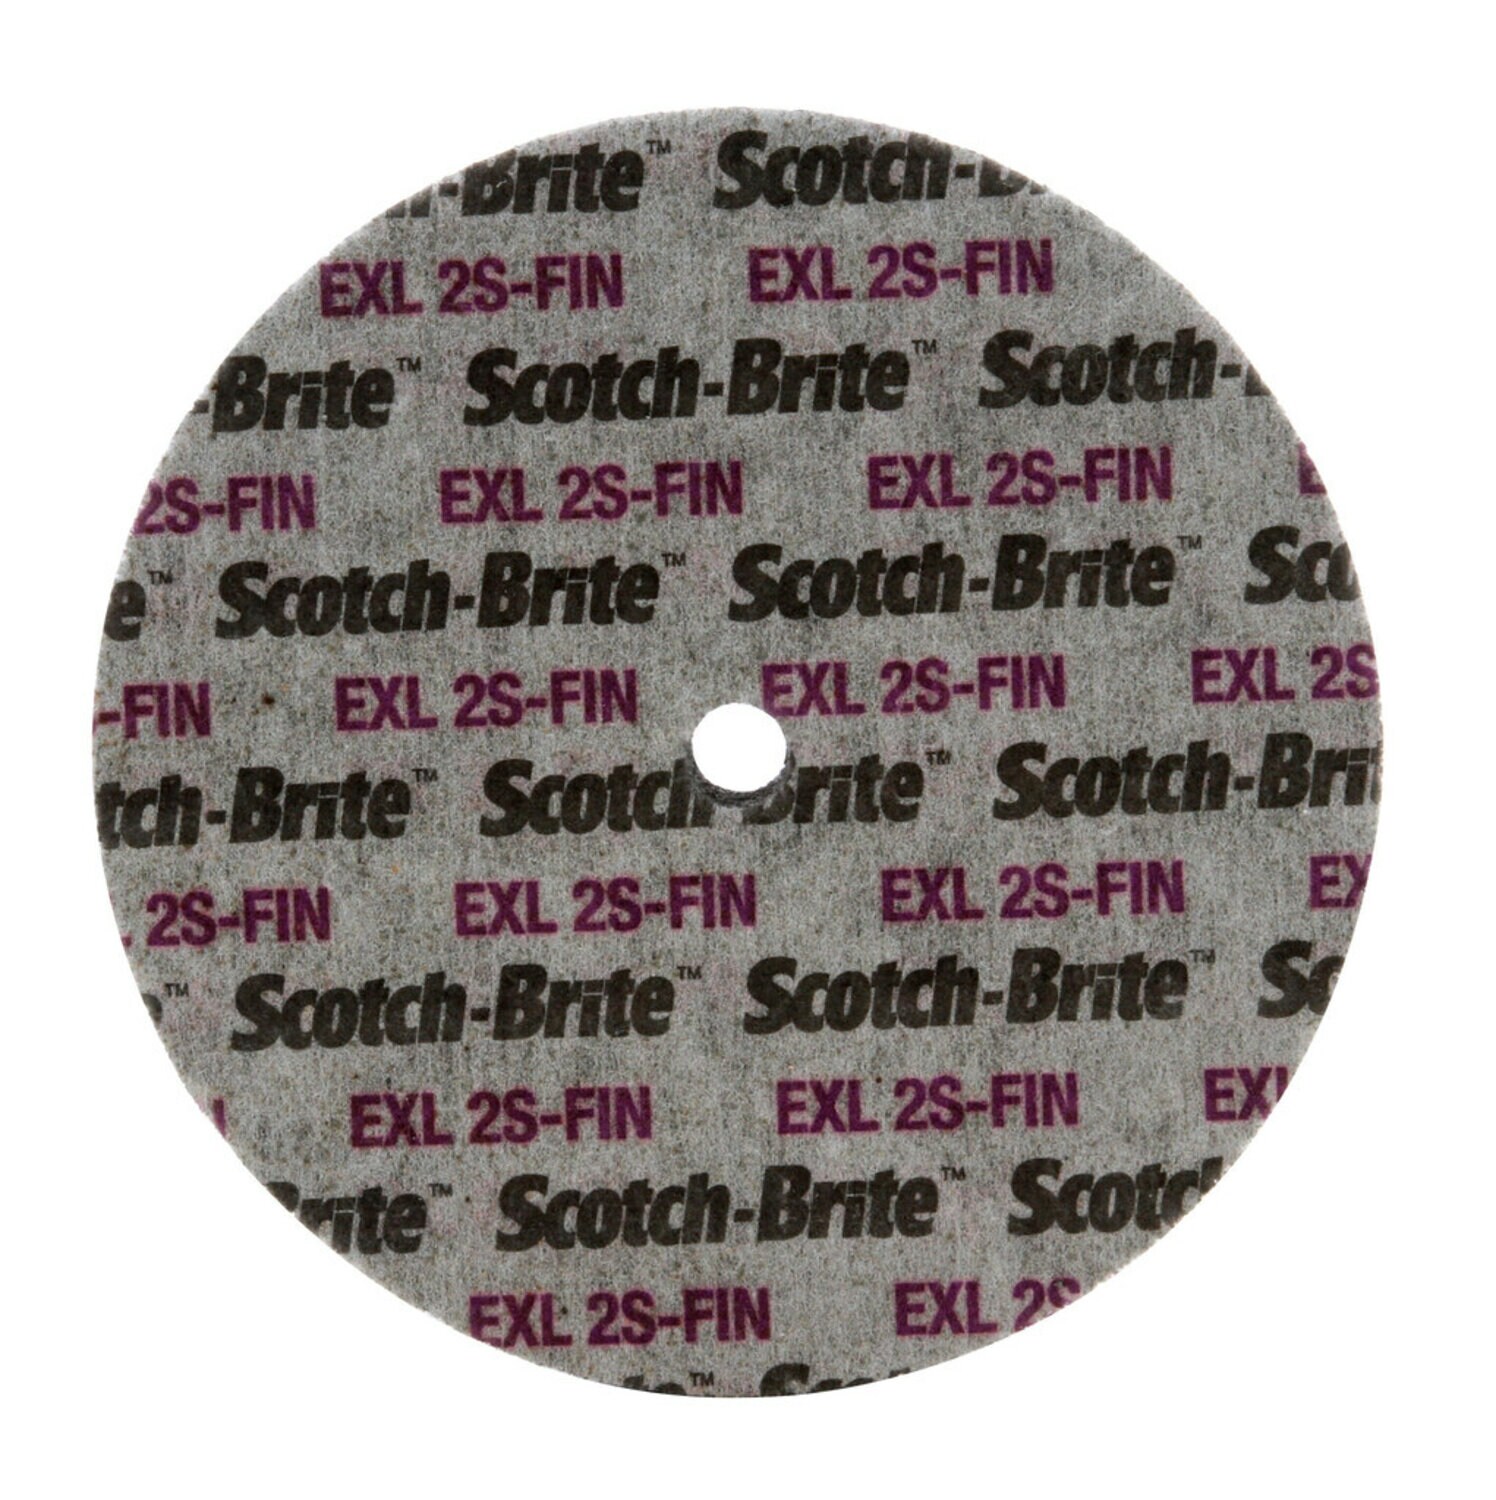 7000046026 - Scotch-Brite EXL Unitized Wheel, XL-UW, 2S Fine, 6 in x 1 in x 1/2 in,
2 ea/Case